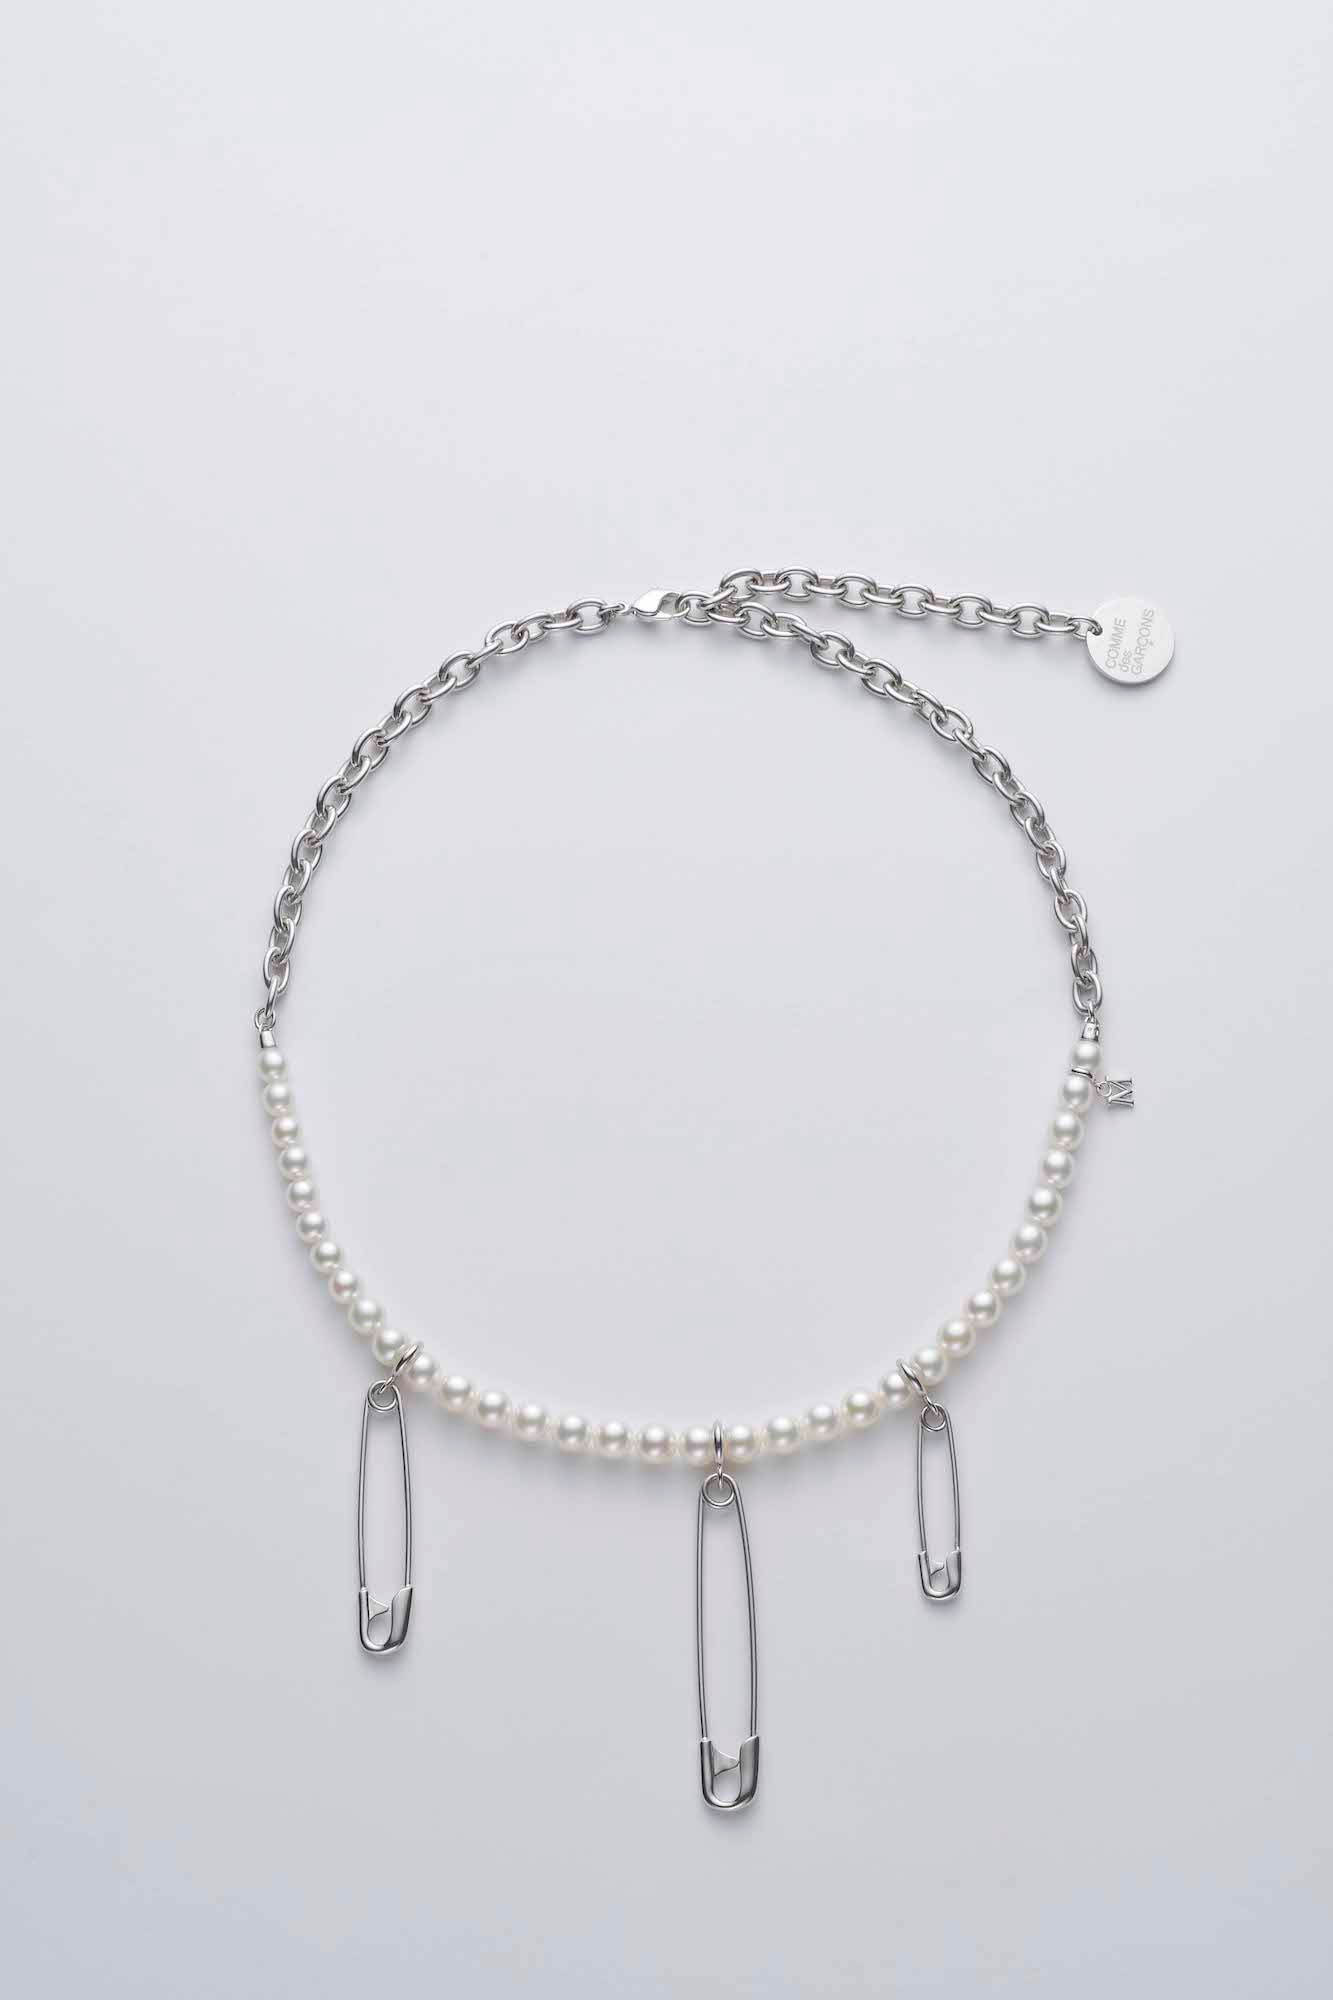 COMME des GARÇONS x Mikimoto Fine Jewelry Collaboration Rei Kawakubo Pearl Silver Necklace Where to Buy